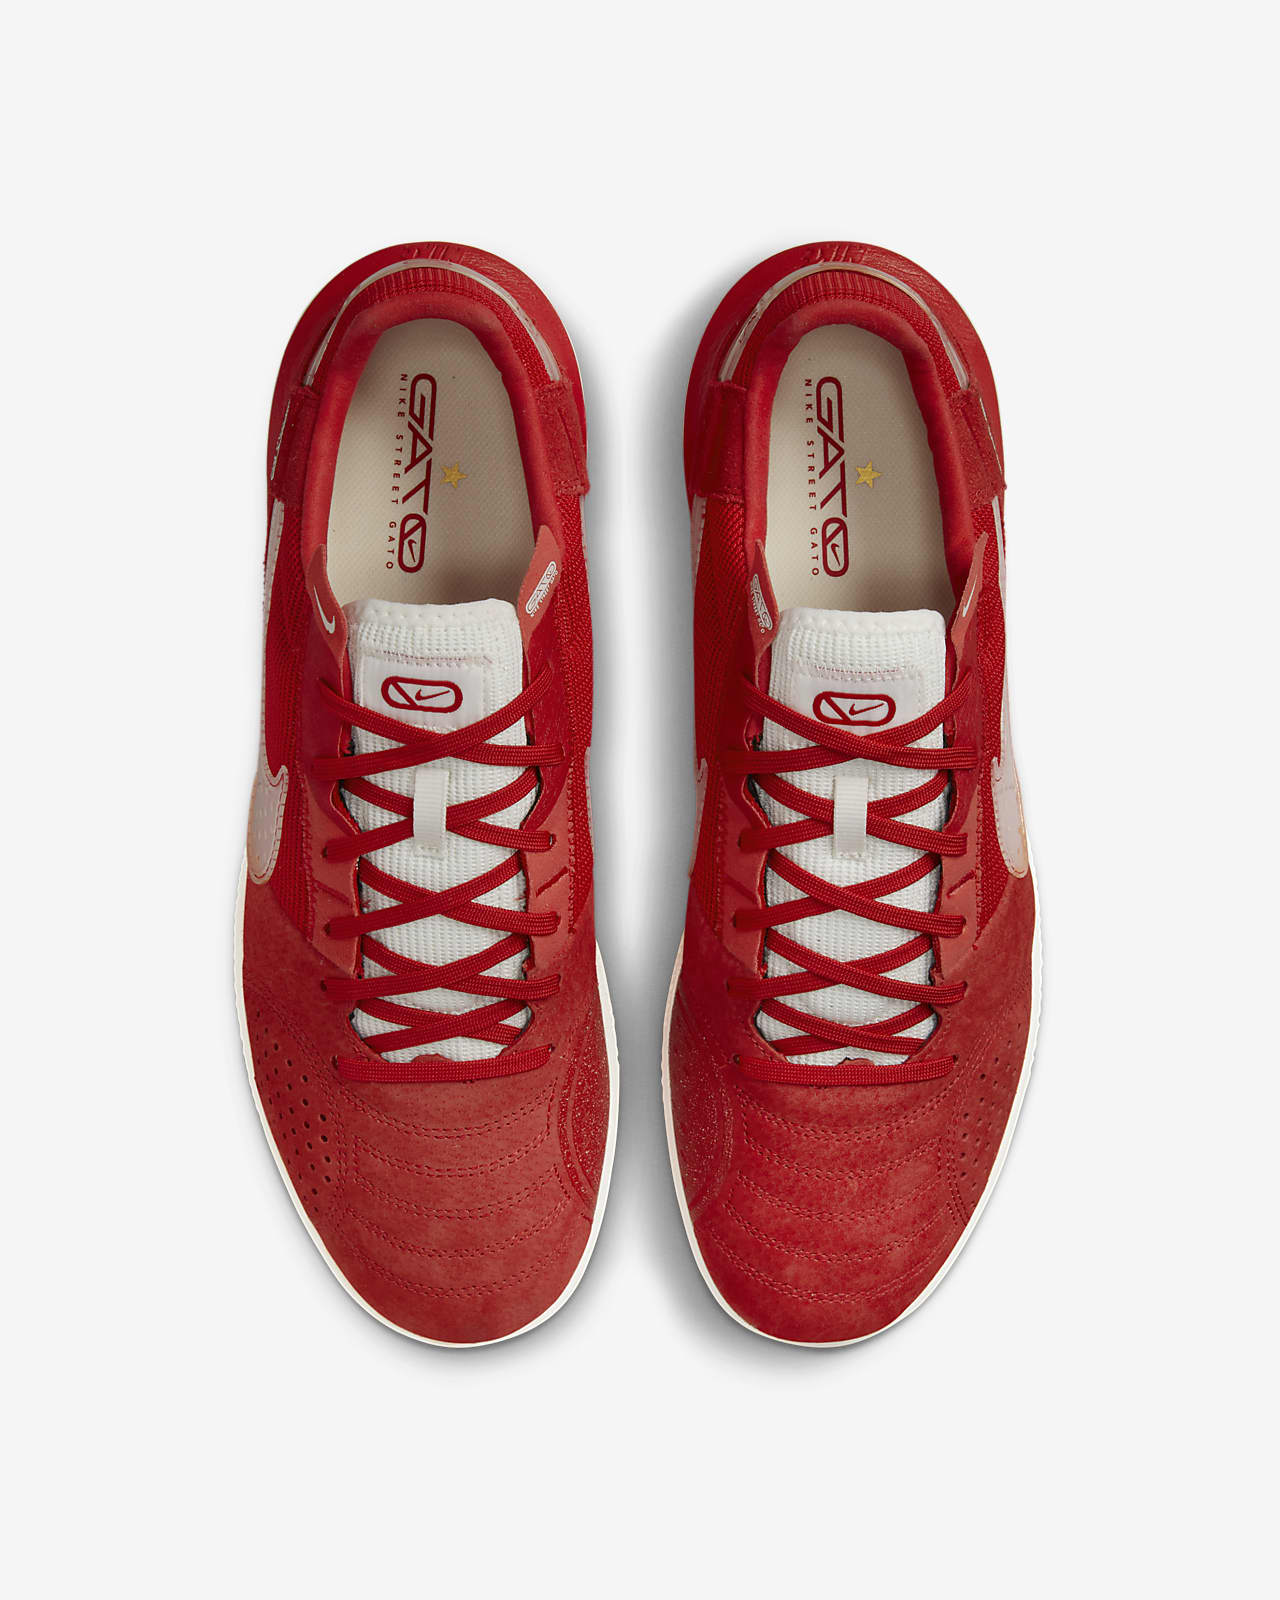 Streetgato Football Shoes. RO